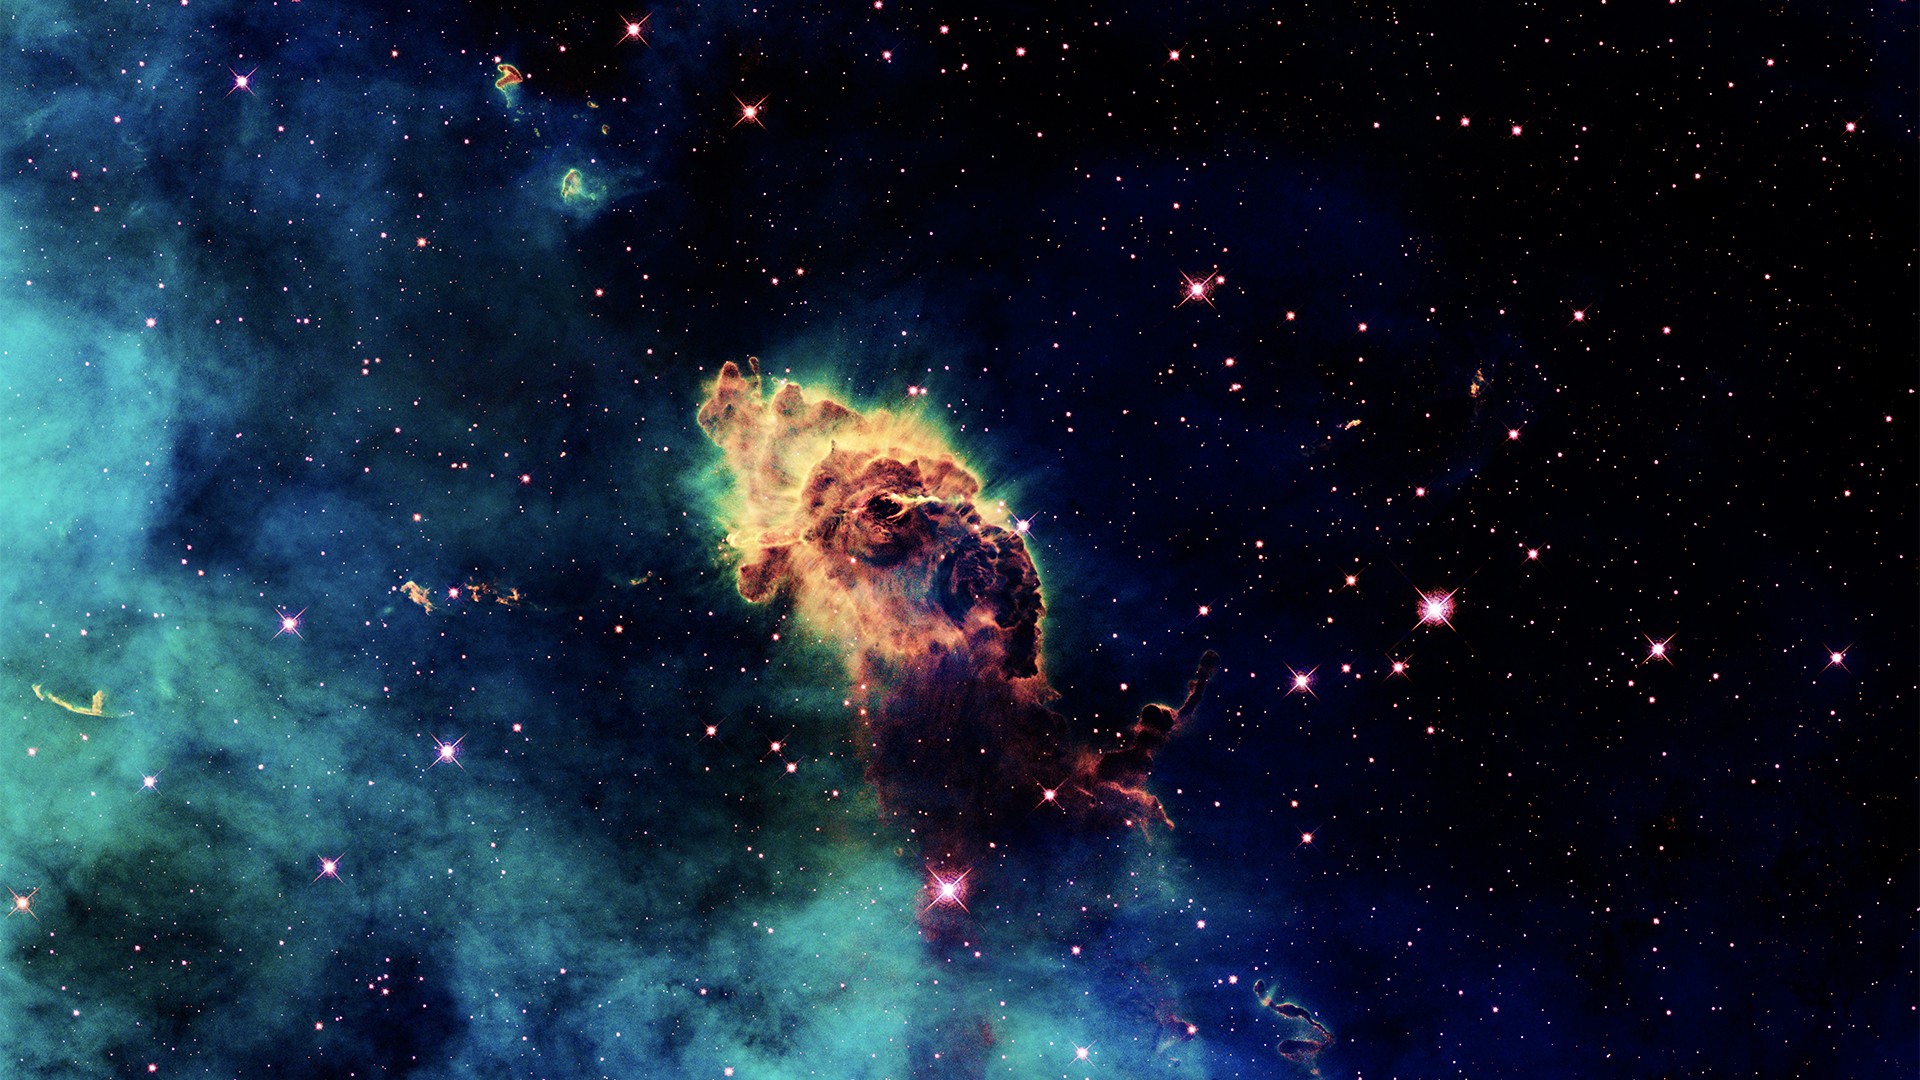 outer space, stars, nebulae, astronomy, Carina nebula - desktop wallpaper